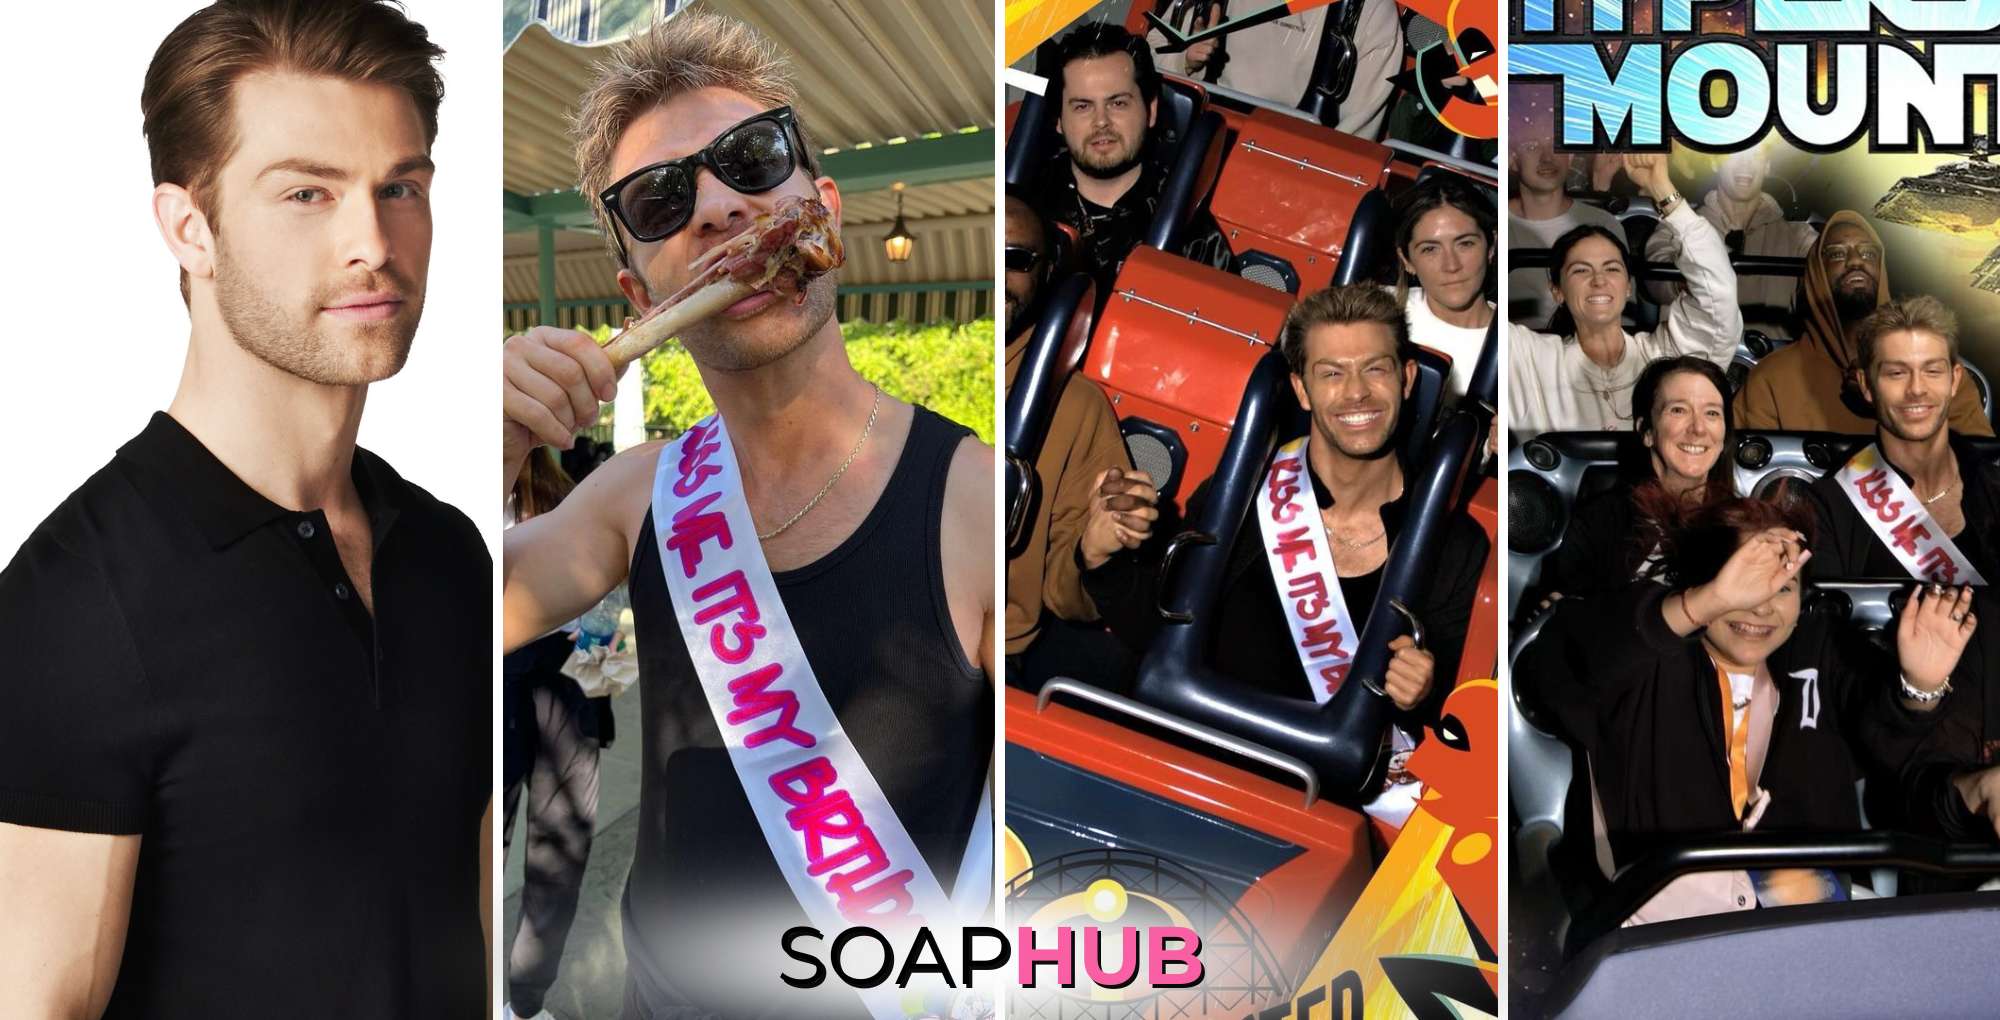 General Hospital star Evan Hofer at Disneyland with the Soap Hub logo.